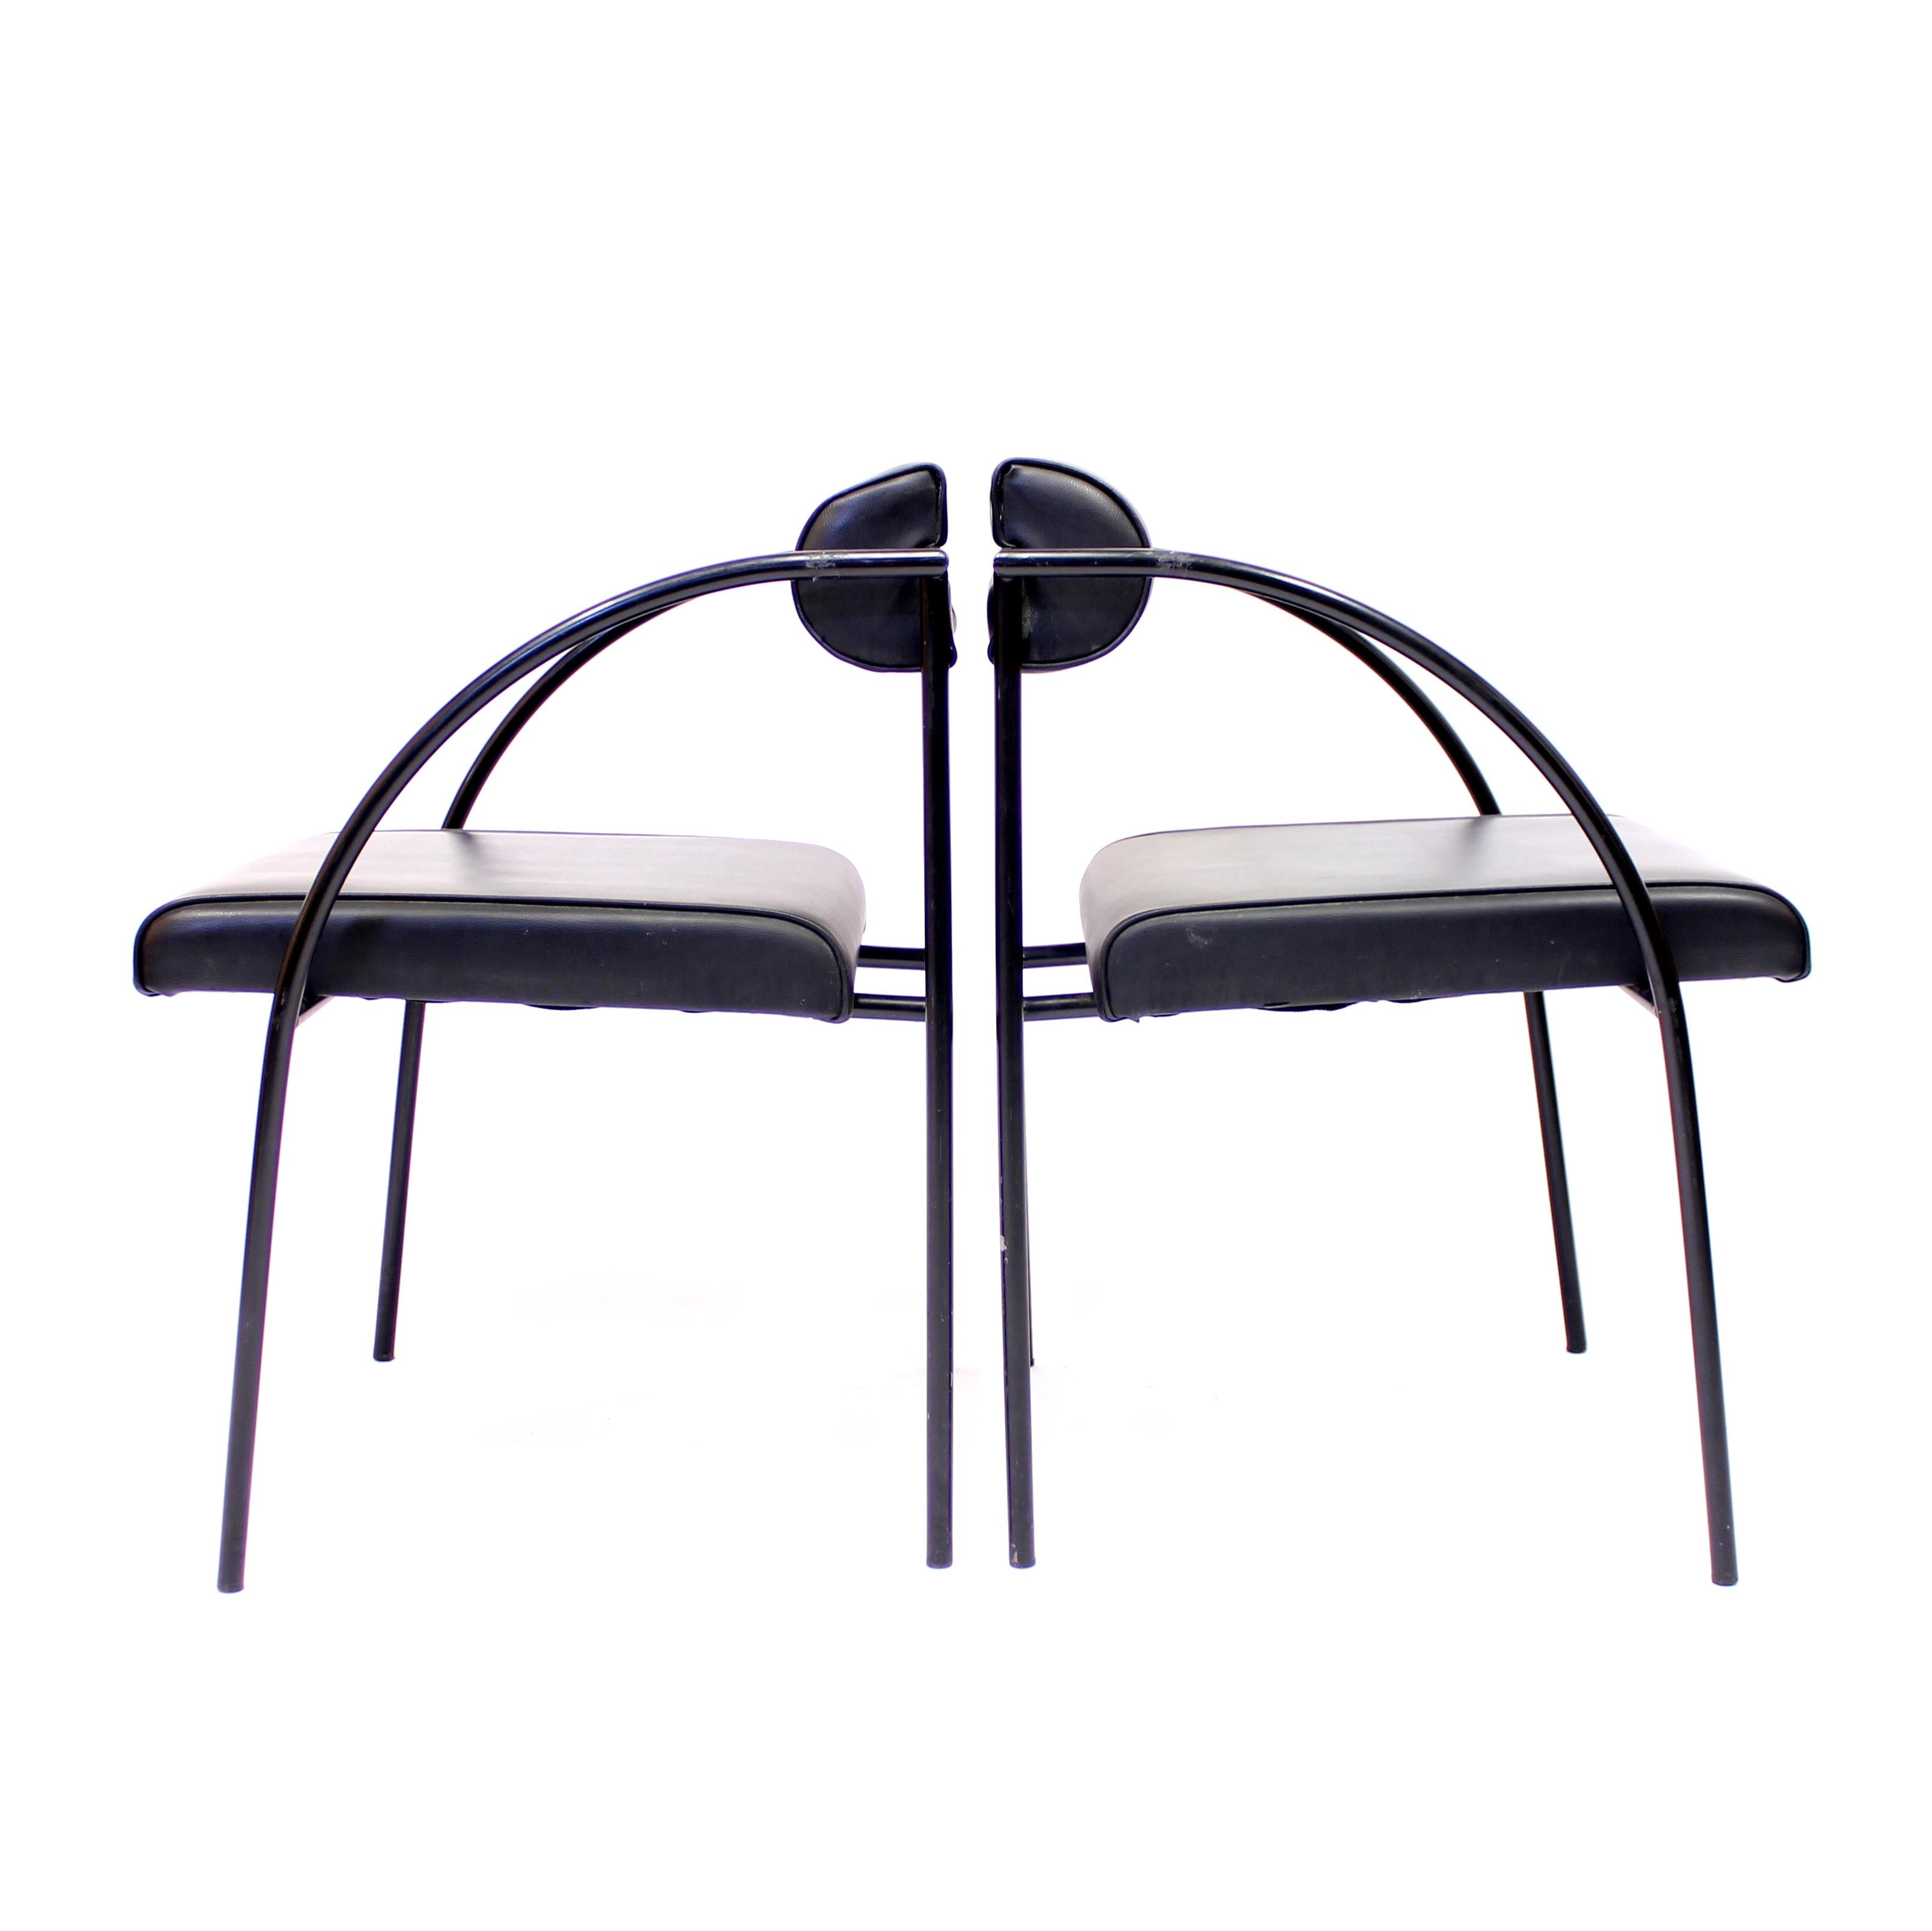 Italian Rodney Kinsman, Pair of Postmodern Vienna Chairs, Bieffeplast, 1980s For Sale